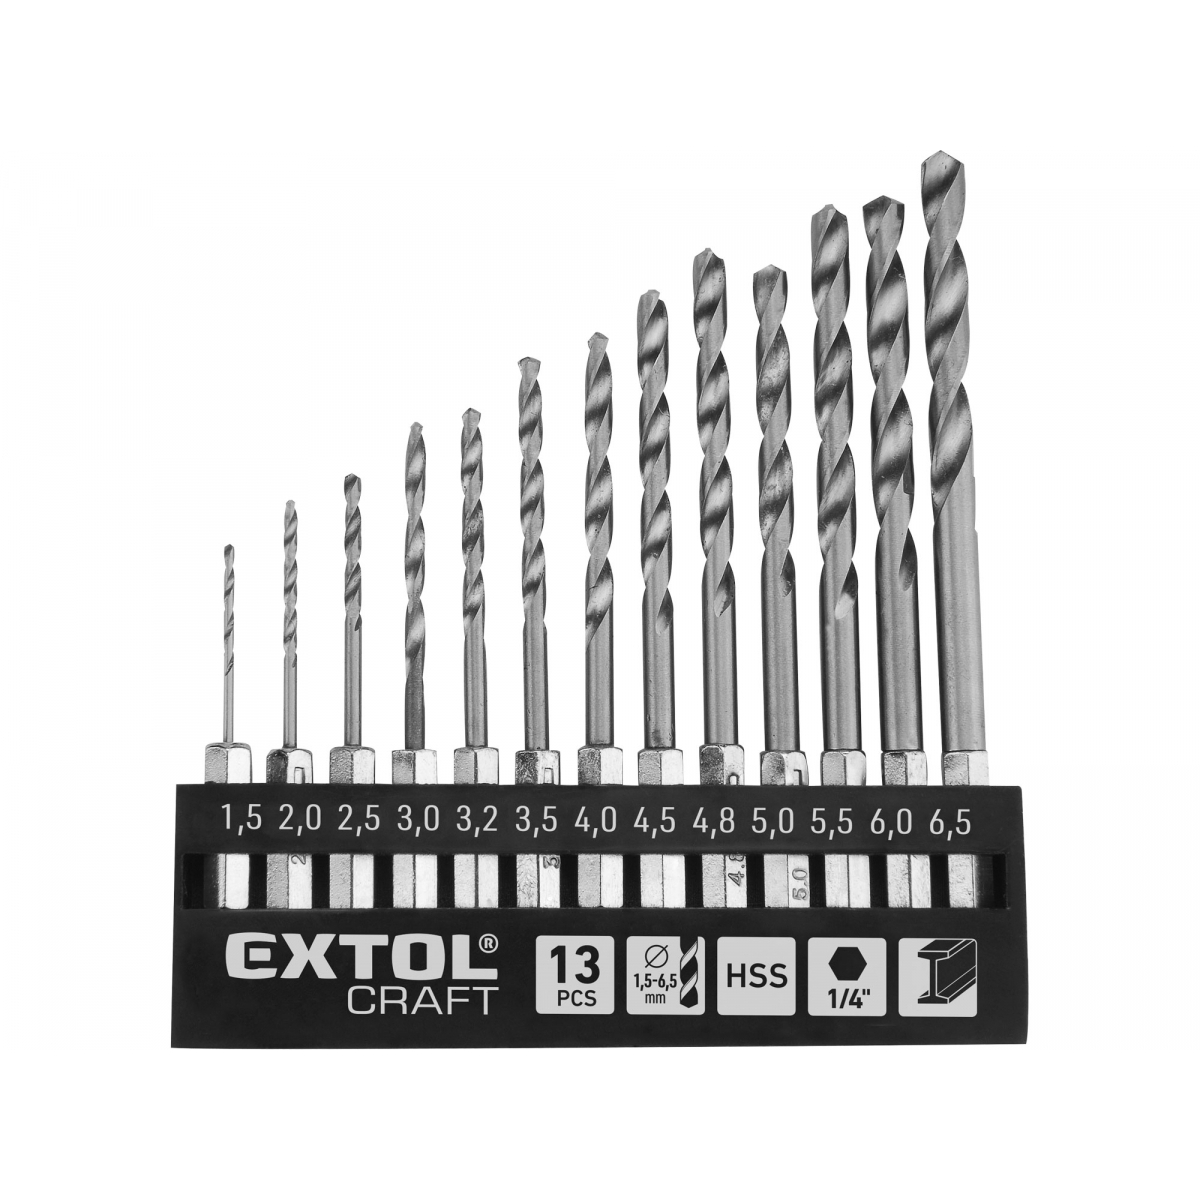 EXTOL CRAFT Vrtáky do kovu se šestihrannou stopkou, 1,5-6,5mm - 13ks